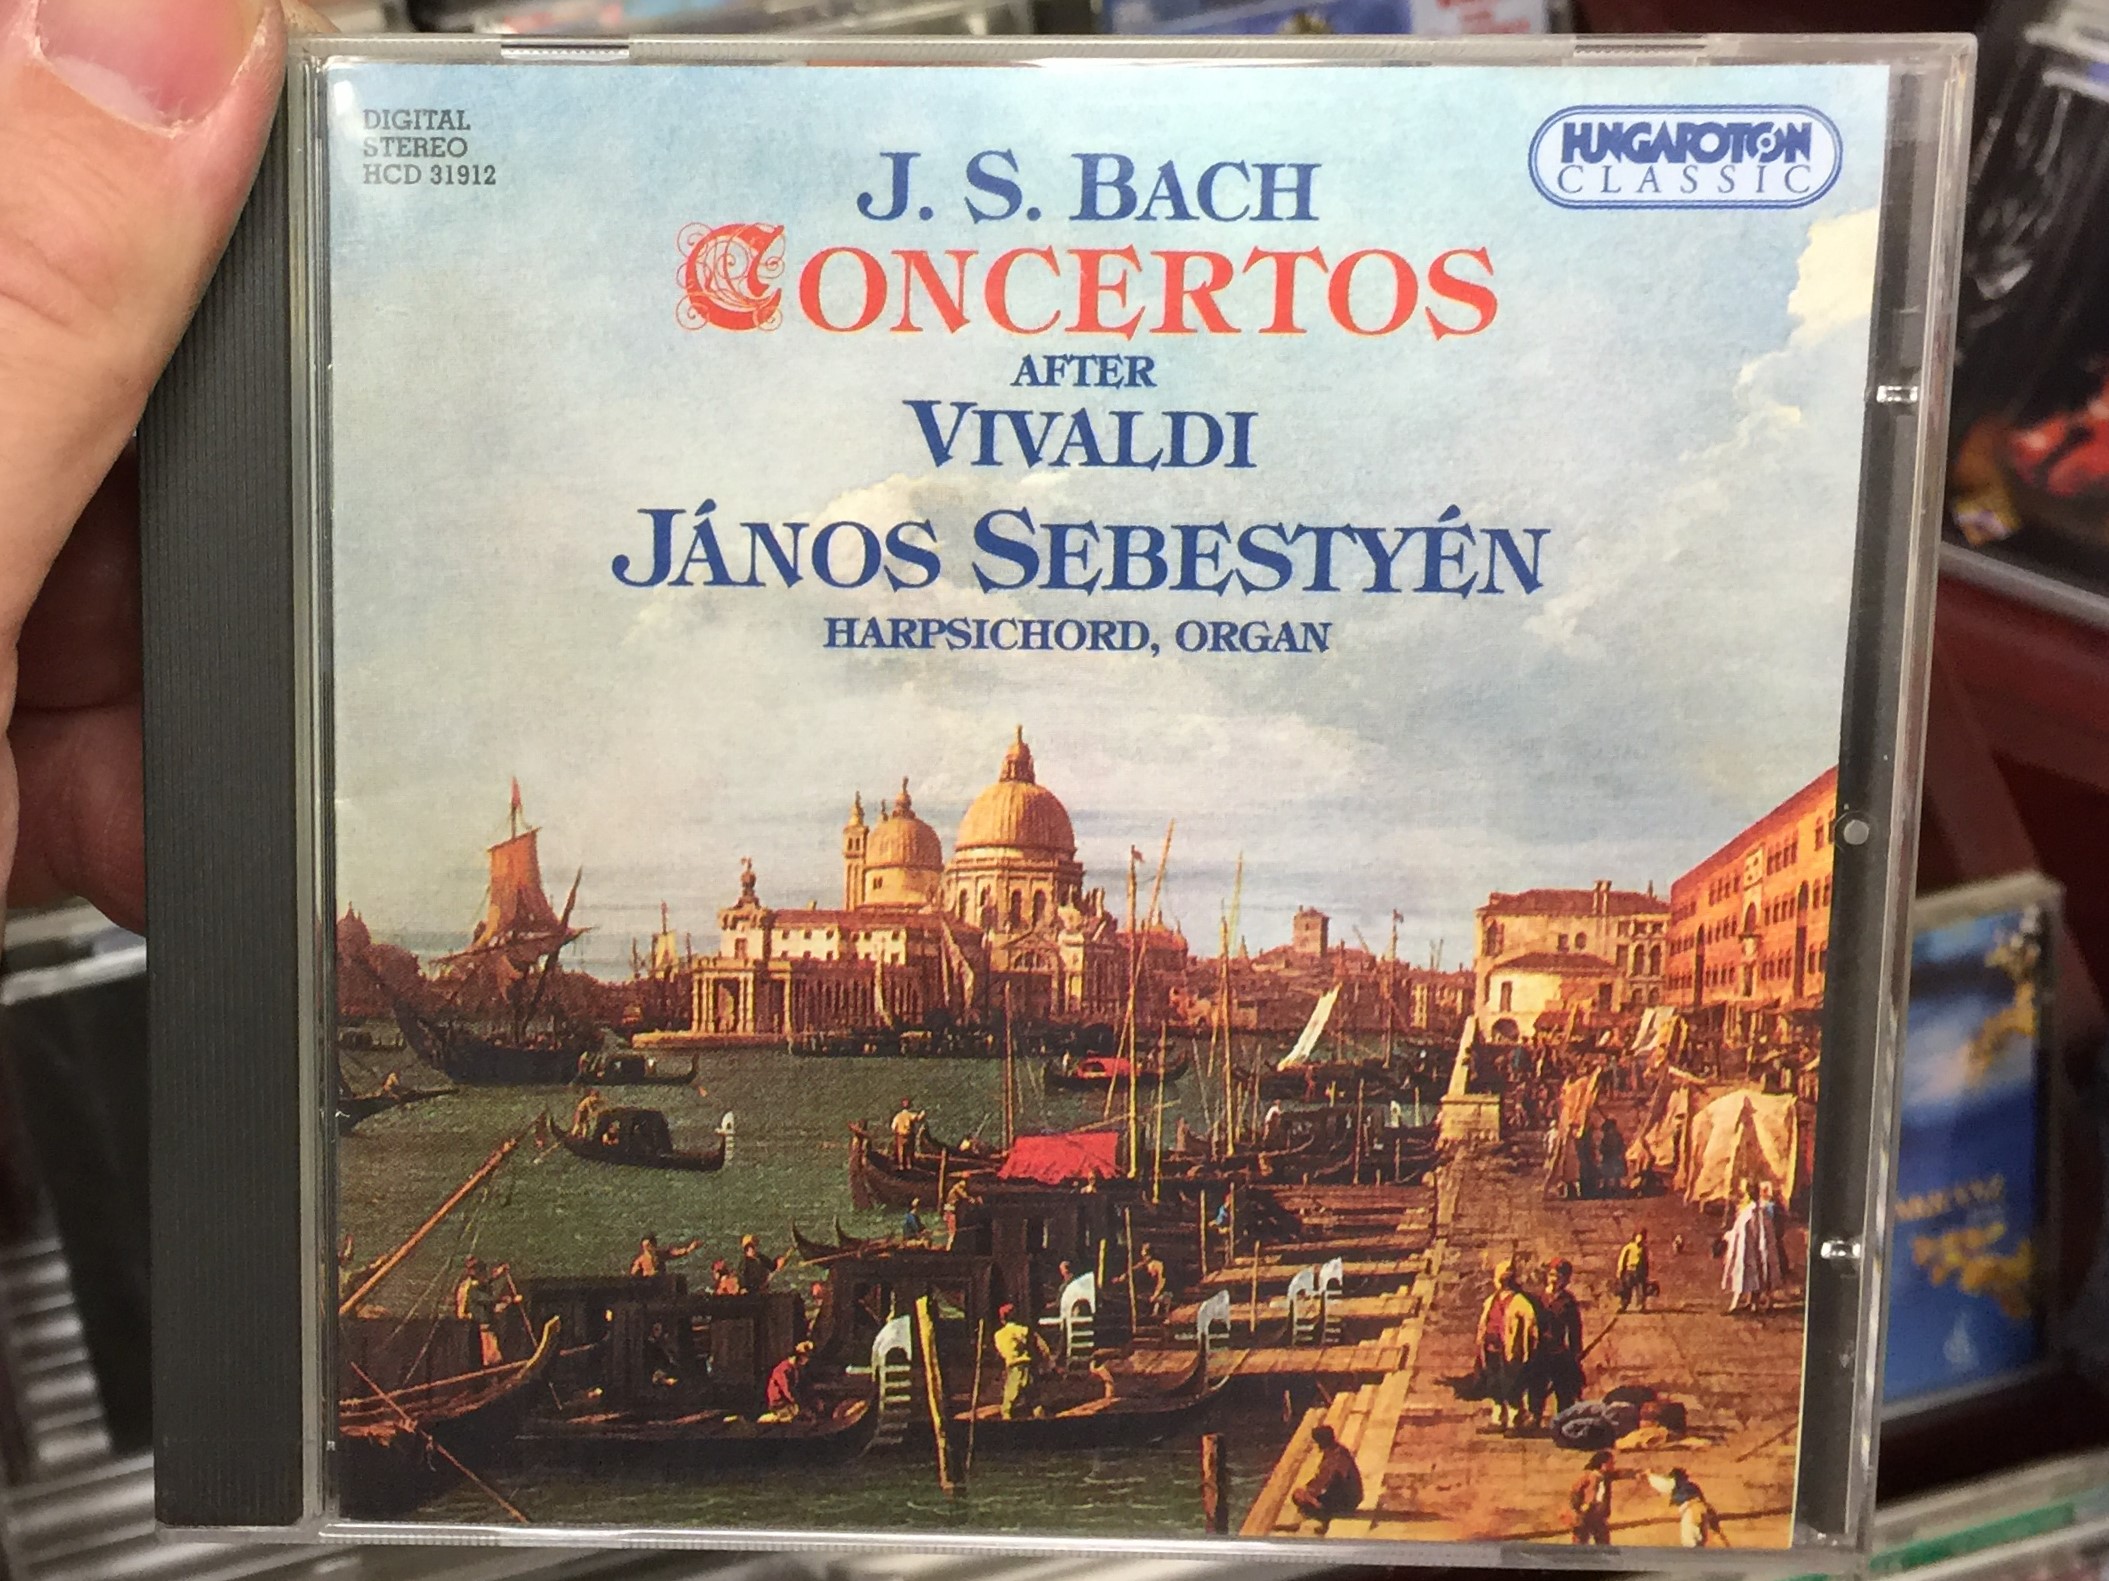 j.-s.-bach-concertos-after-vivaldi-j-nos-sebesty-n-harpsichord-organ-hungaroton-classic-audio-cd-1999-stereo-hcd-31912-1-.jpg